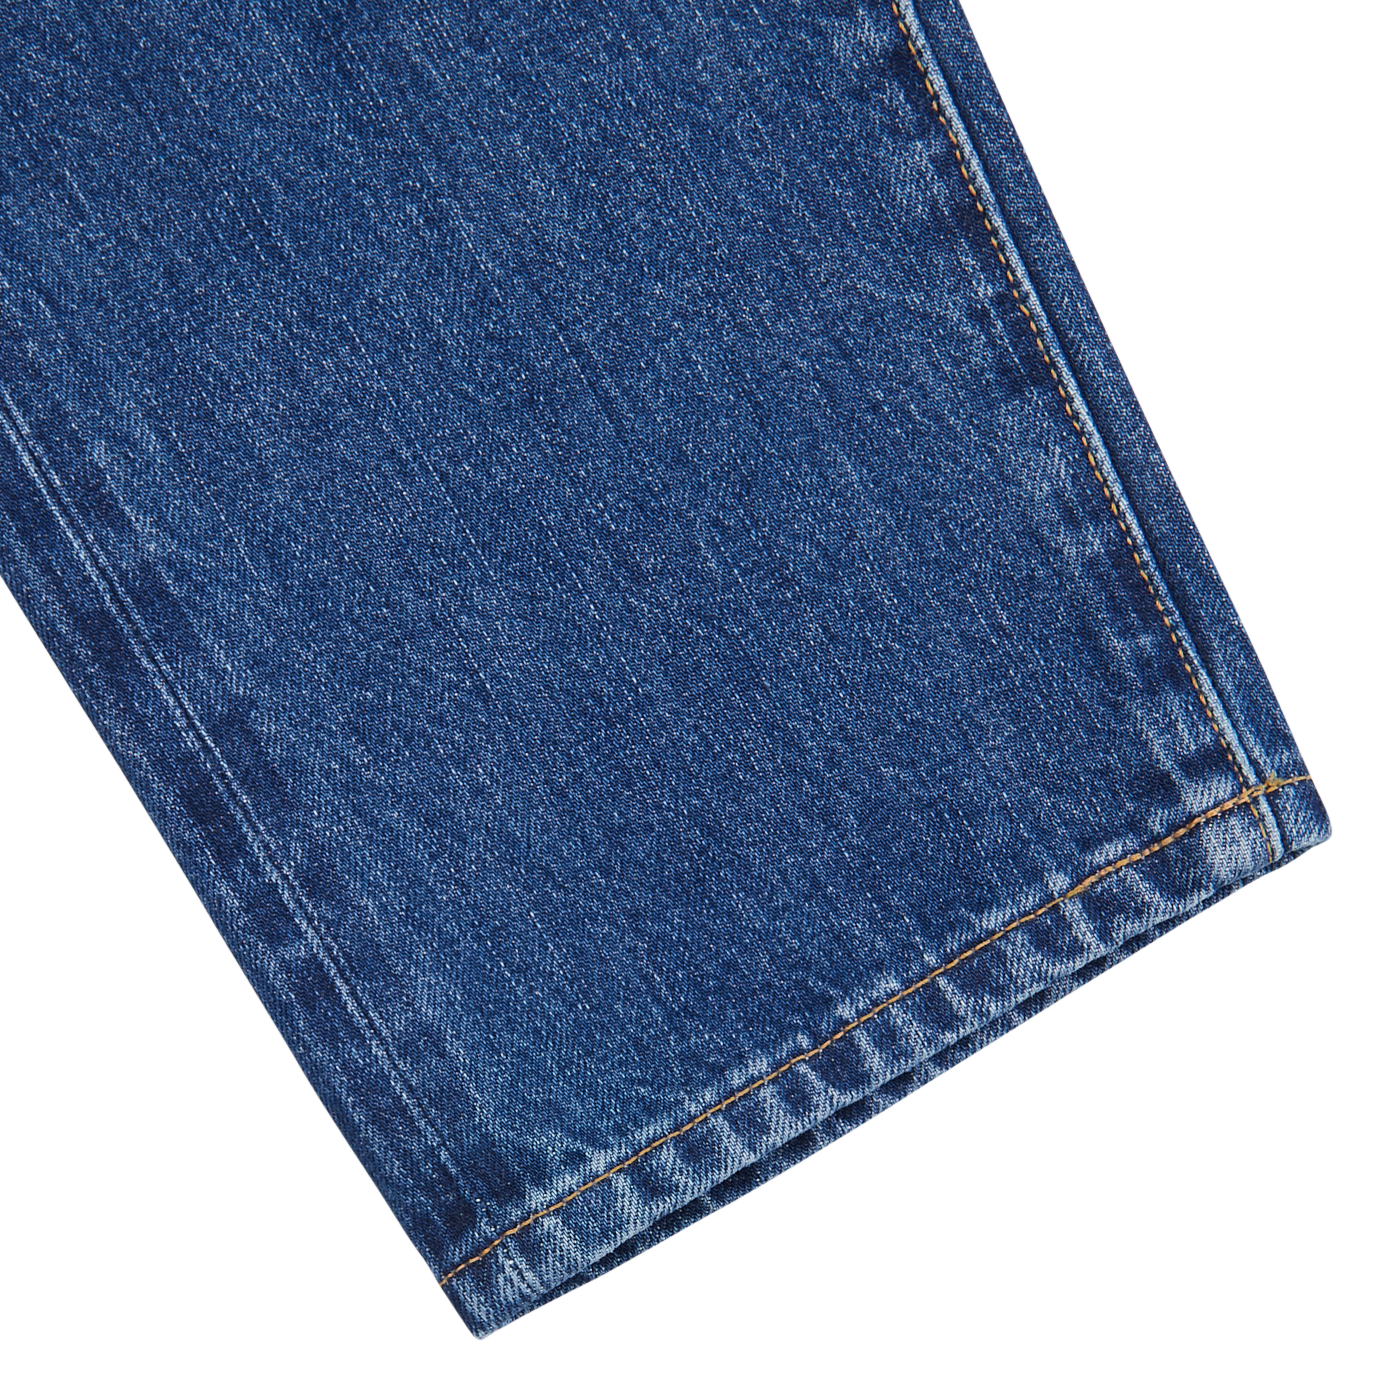 Close-up of C.O.F Studio Blue Organic Kurioki Cotton M7 6x Wash Jeans fabric, focusing on the hem and stitch details against a white background.